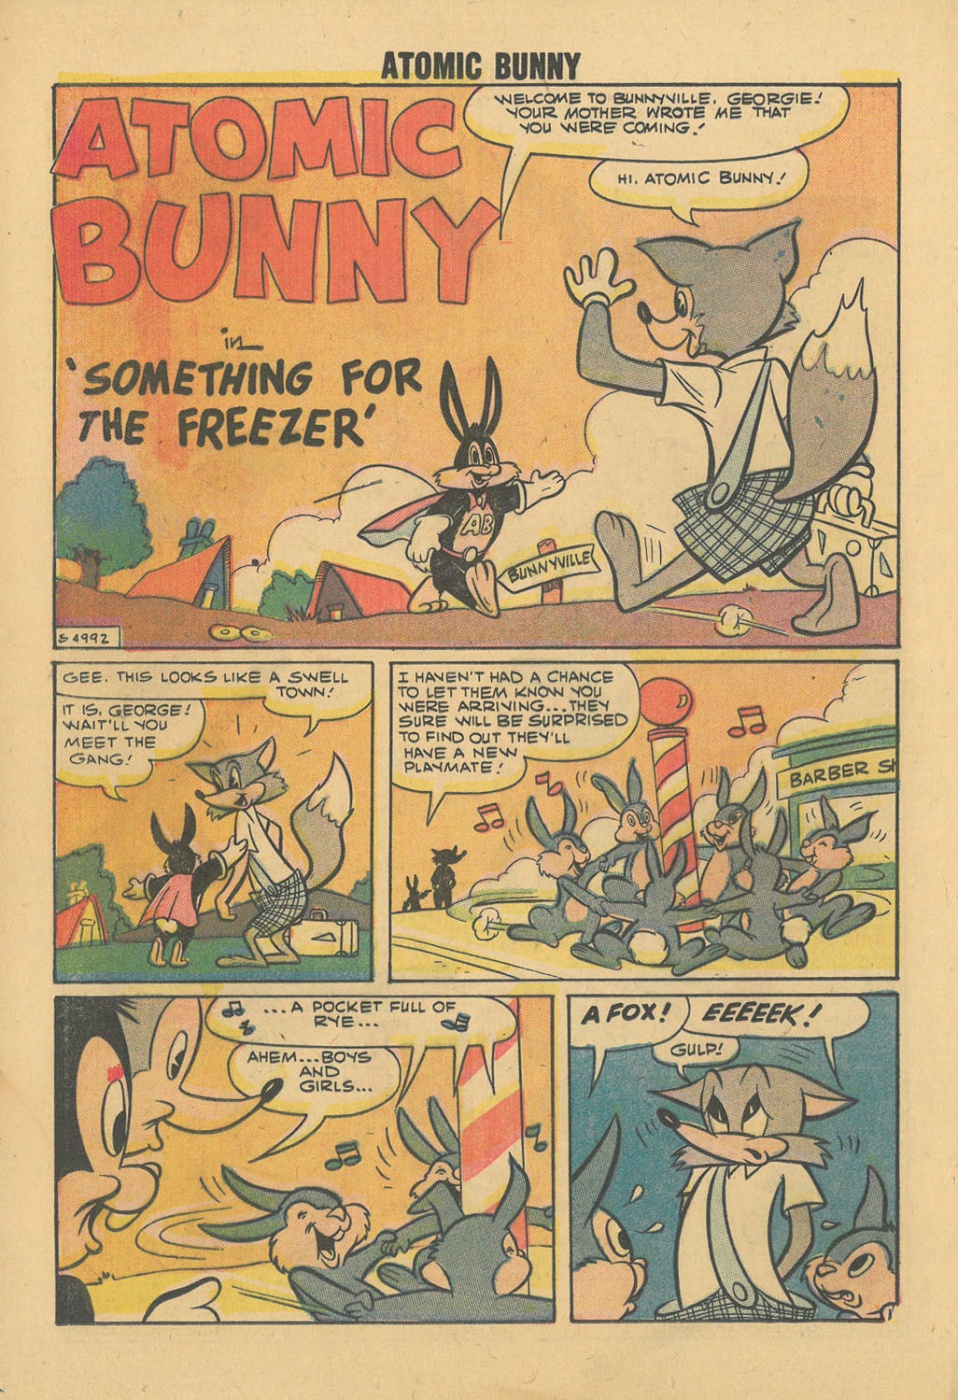 Atomic-Bunny-Comic-Strips (c) (12)